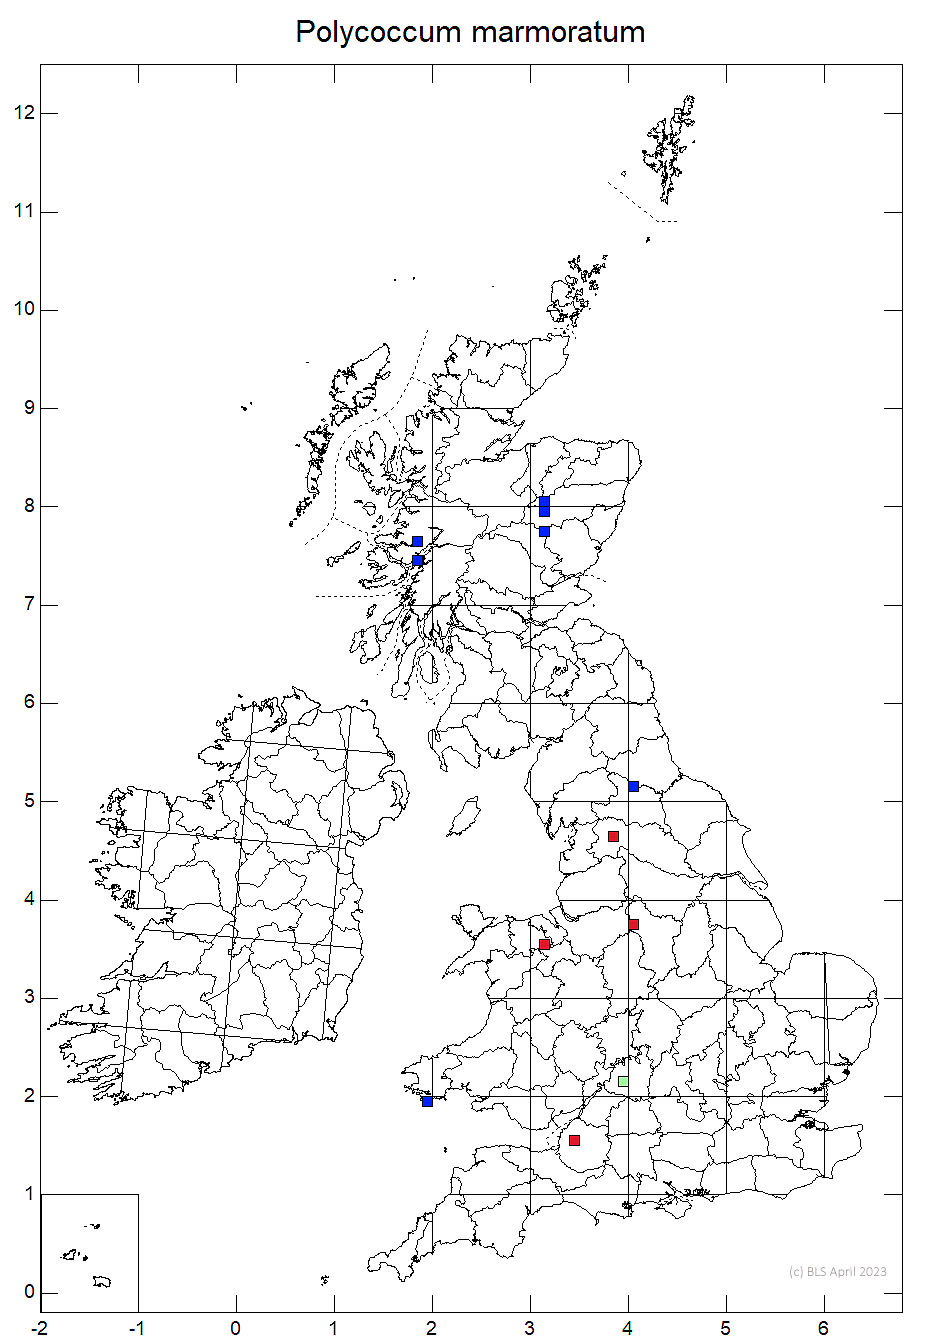 Polycoccum marmoratum 10km sq distribution map